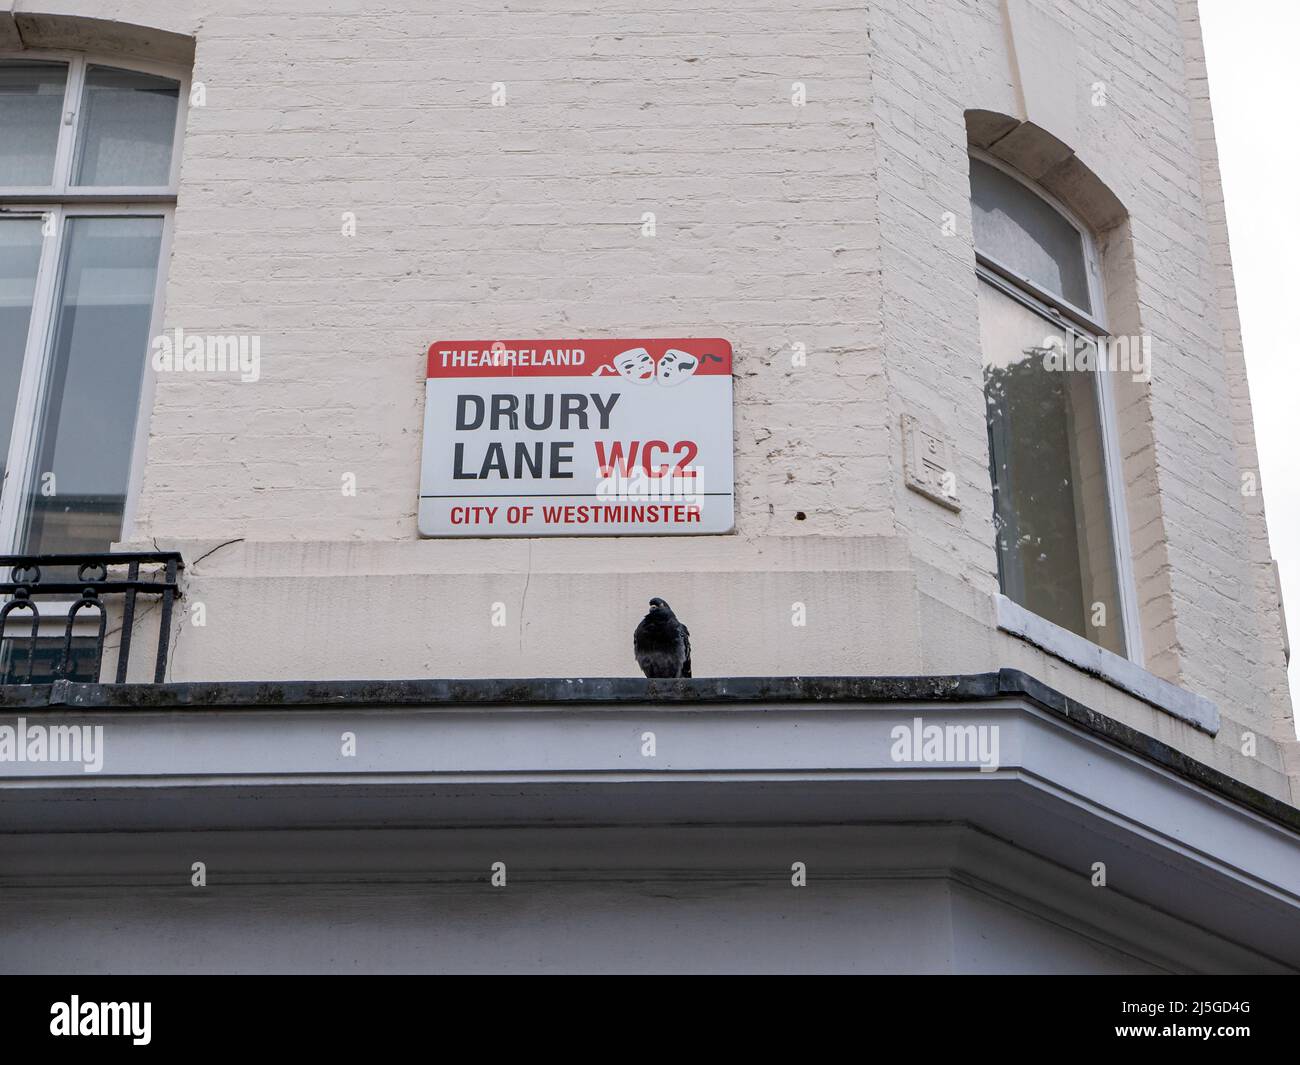 London, UK-09.10.21: Drury Lane Street name sign, City of Westminster, London, UK Stock Photo